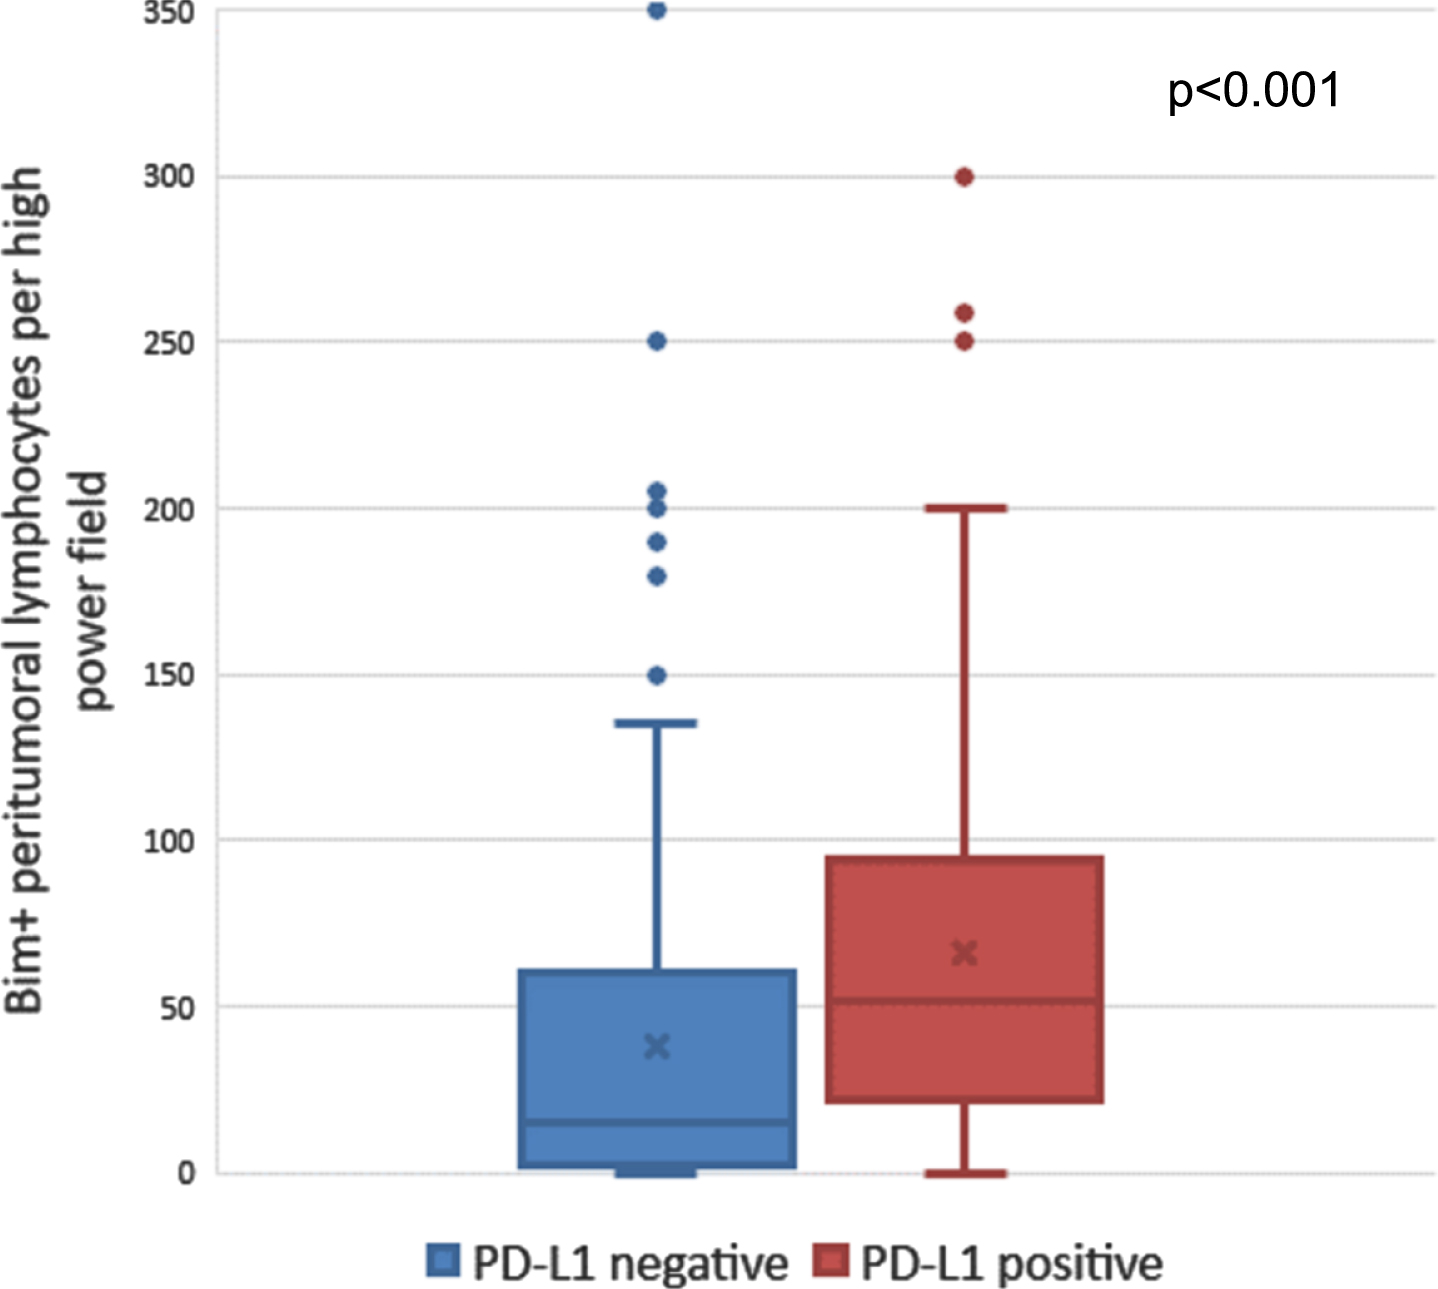 Number of Bim-positive peritumoral lymphocytes among PD-L1 positive versus PD-L1 negative tumors. Abbreviations: Bim = BCL-2-interacting mediator of cell death; PD-L1 = programmed death ligand-1.